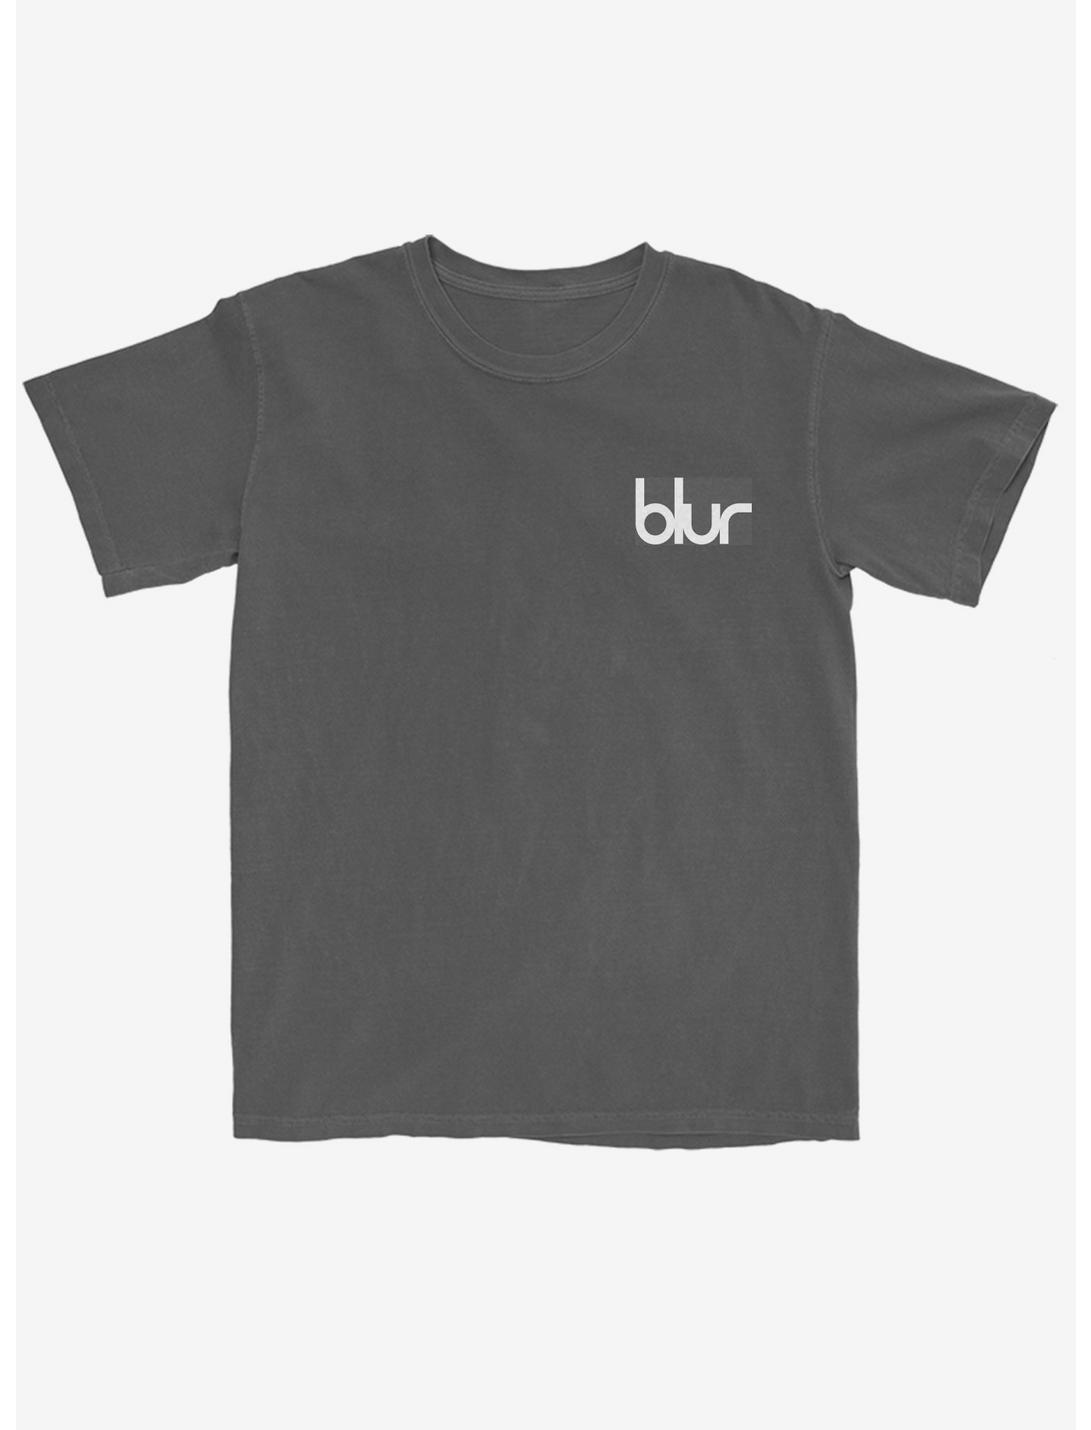 Blur Parklife Boyfriend Fit Girls T-Shirt, CHARCOAL, hi-res